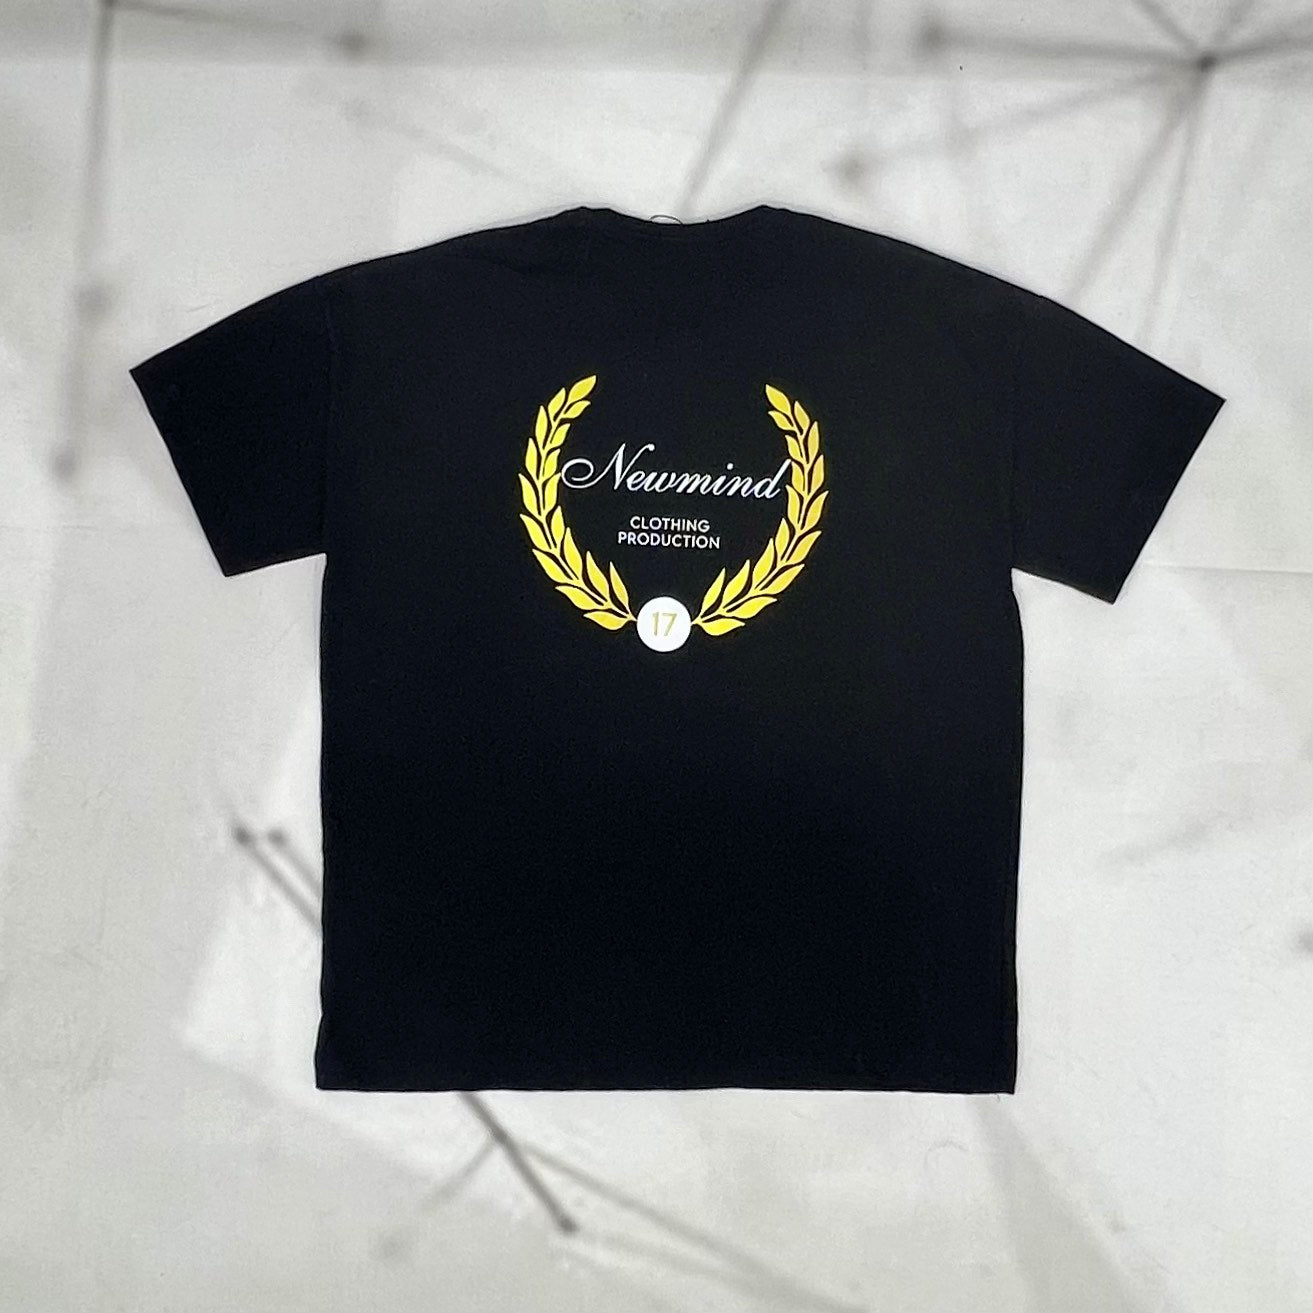 T-Shirt μαύρο oversize 100% βαμβάκι ελληνικής κατασκευης